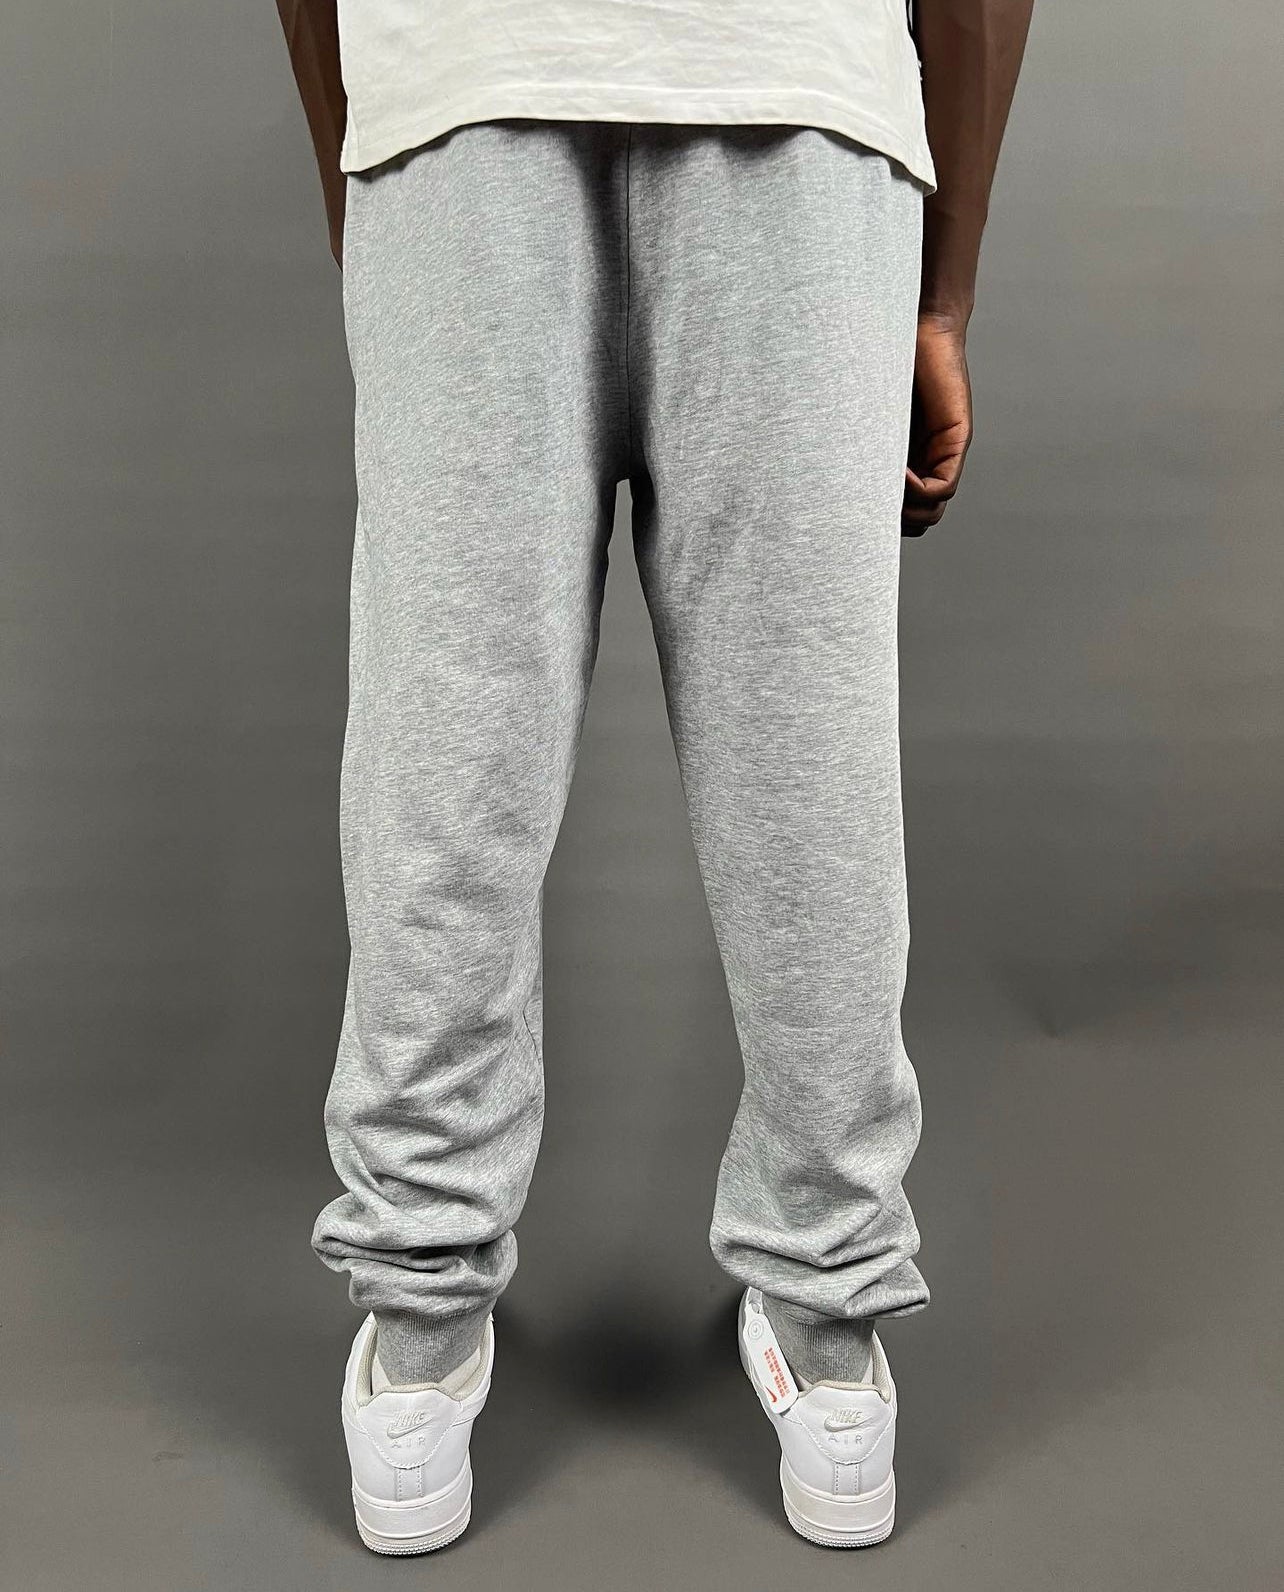 Umbro jogger pants in grey